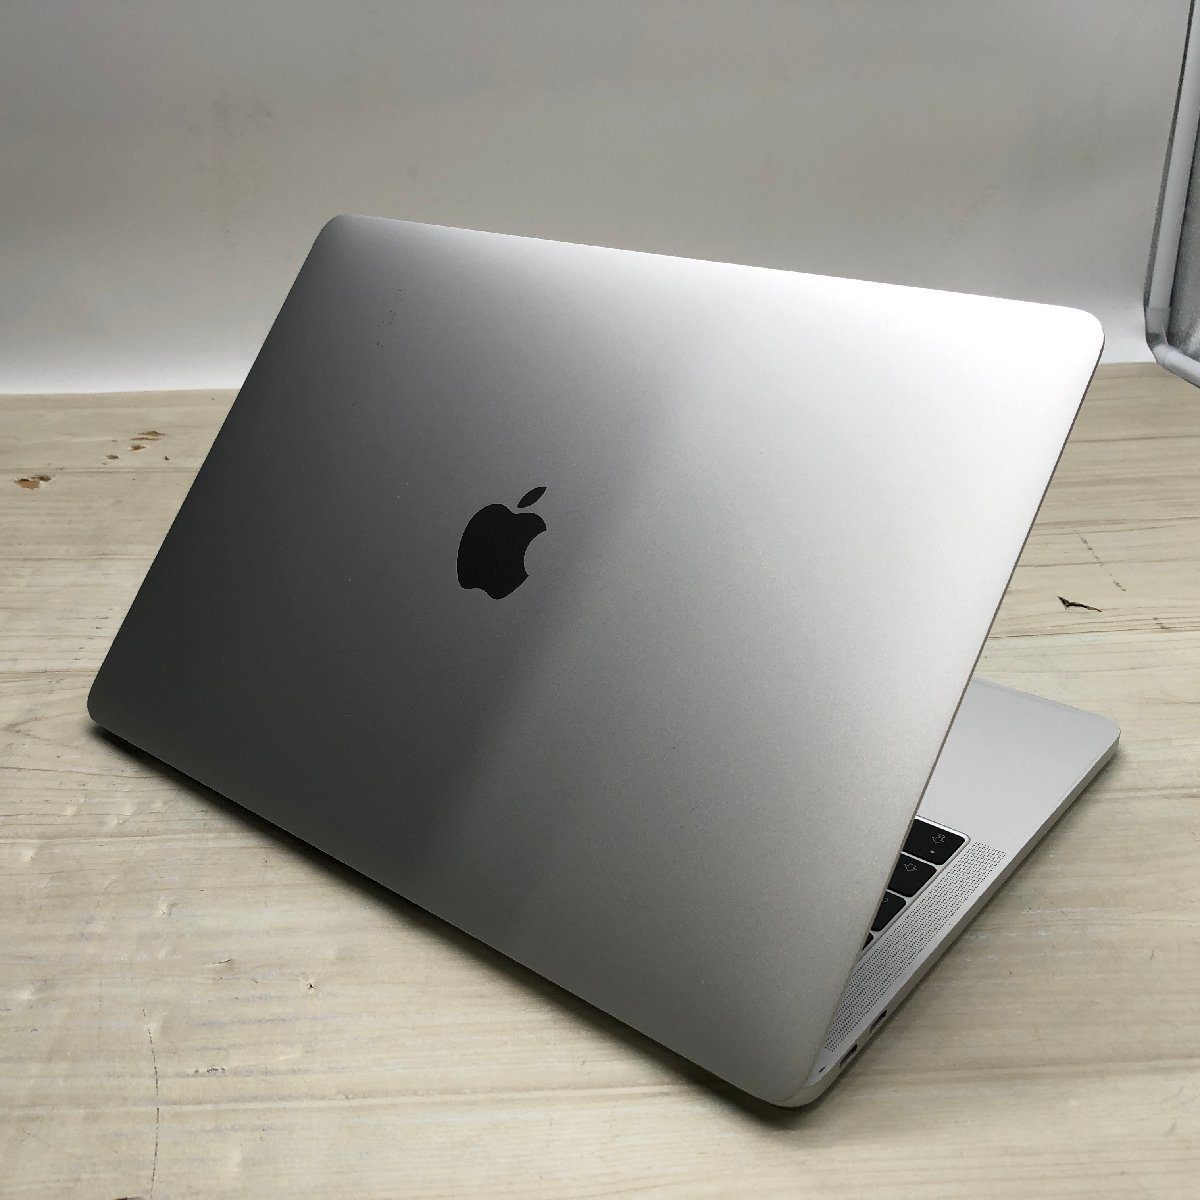 Apple MacBook Pro 13-inch 2017 Two Thunderbolt 3 ports Core i5 